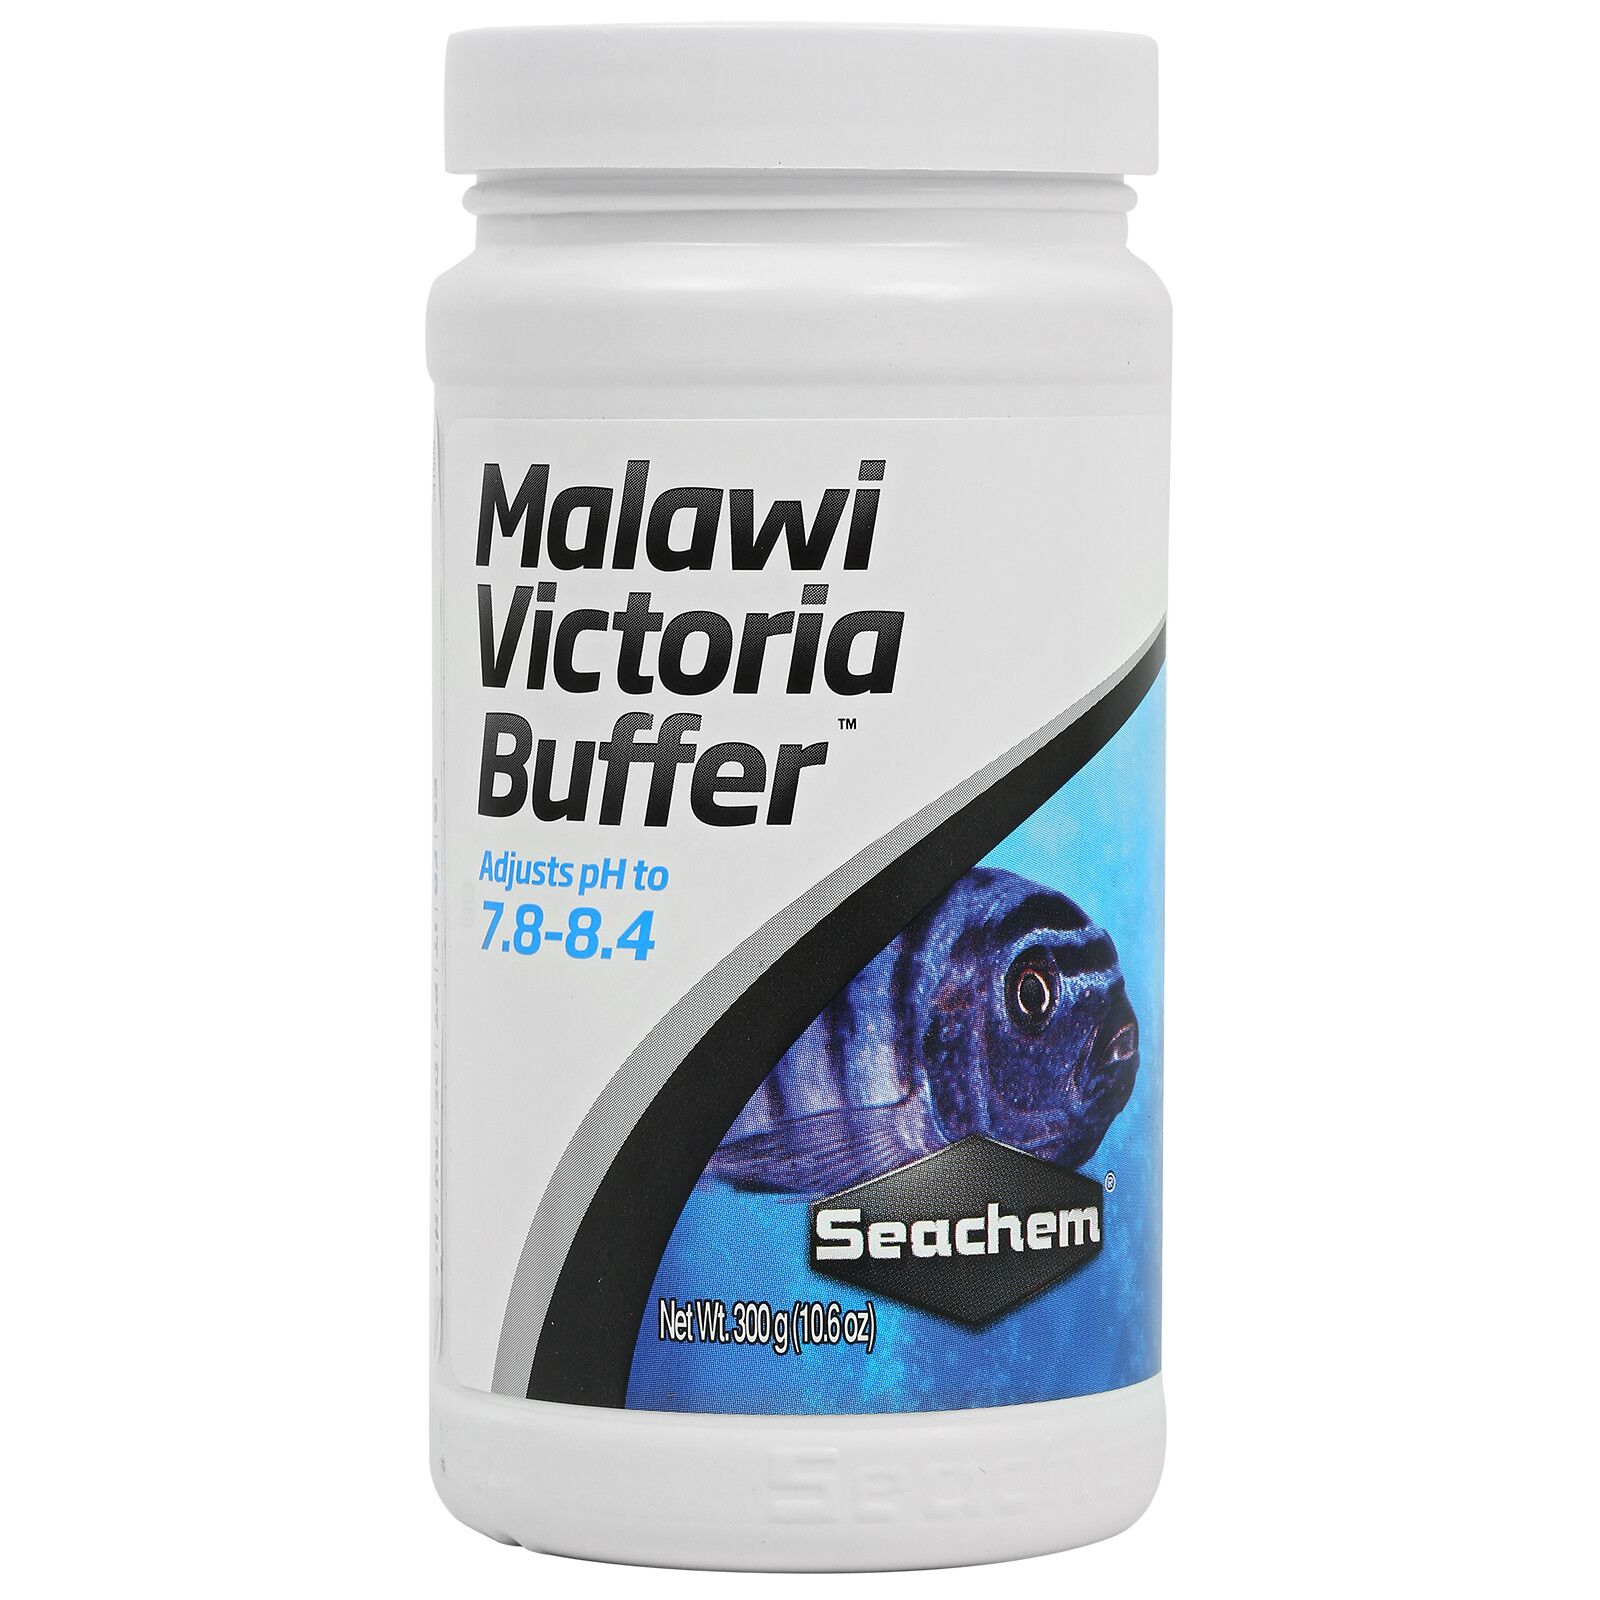 https://www.aquasabi.com/media/image/product/25859/lg/seachem-malawi-victoria-buffer.jpg